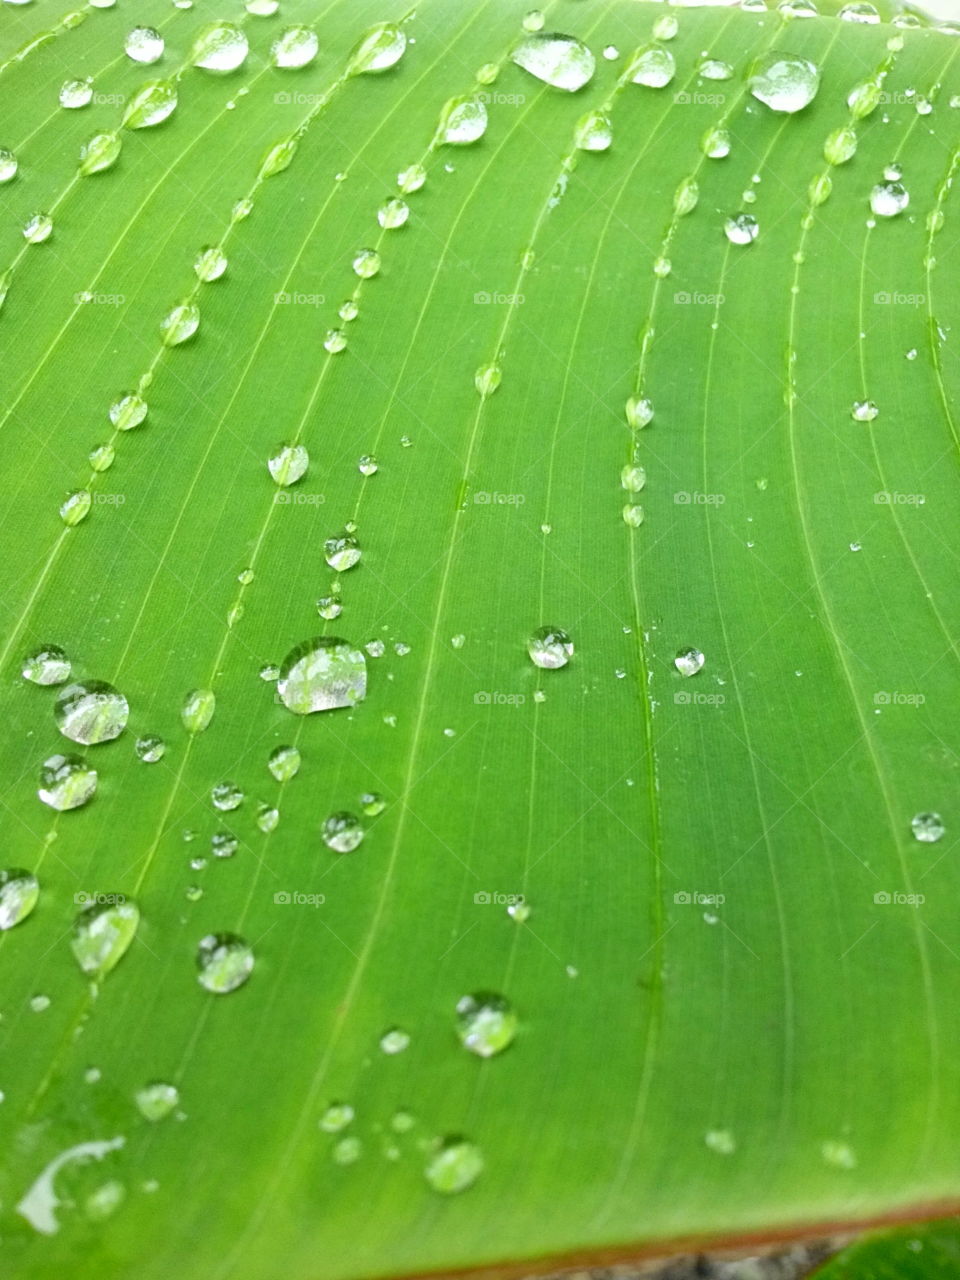 Dew on the leaf